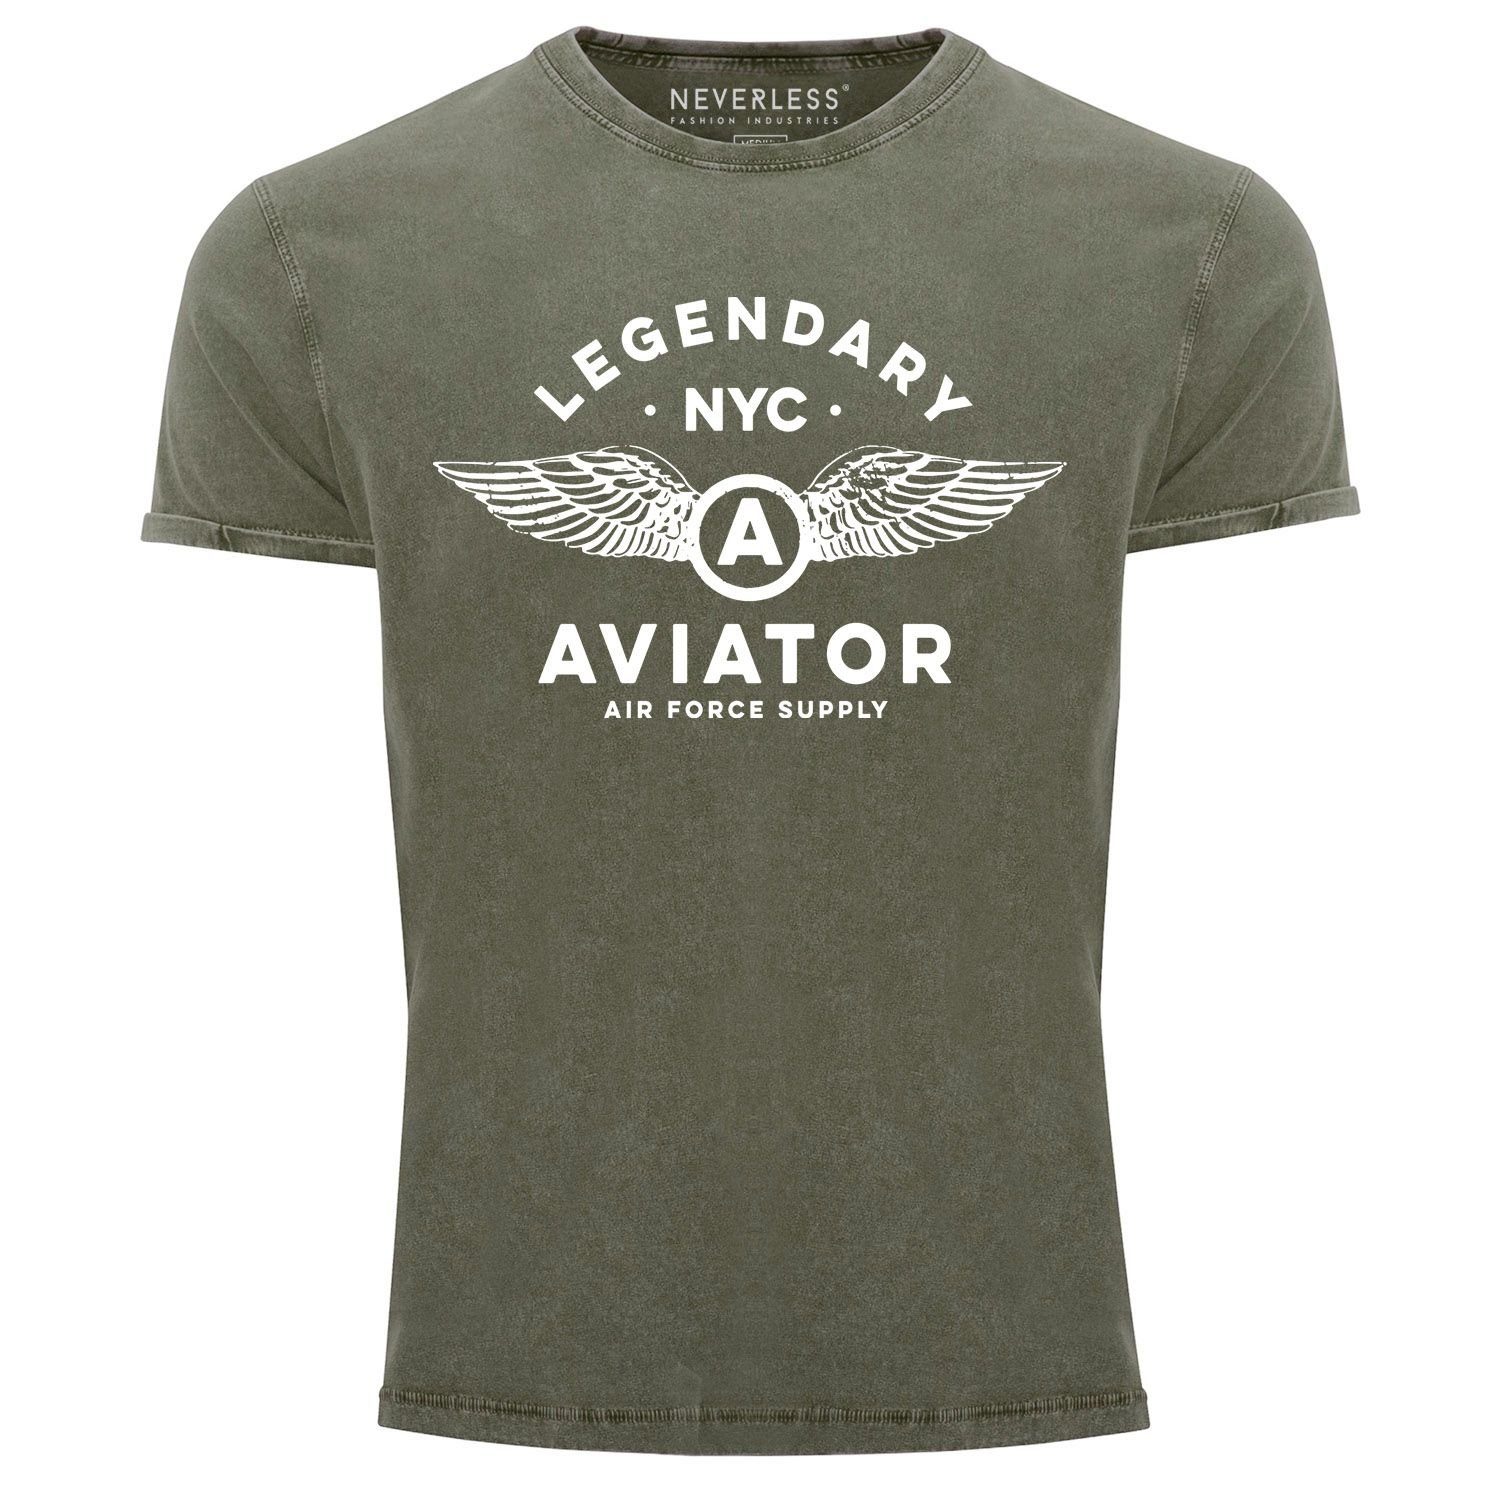 Neverless® Print-Shirt mit Luftwaffe Slim Look Vintage NYC Aviator Print Force Legendary Flügel Air Shirt Neverless oliv Used Fit Herren Printshirt